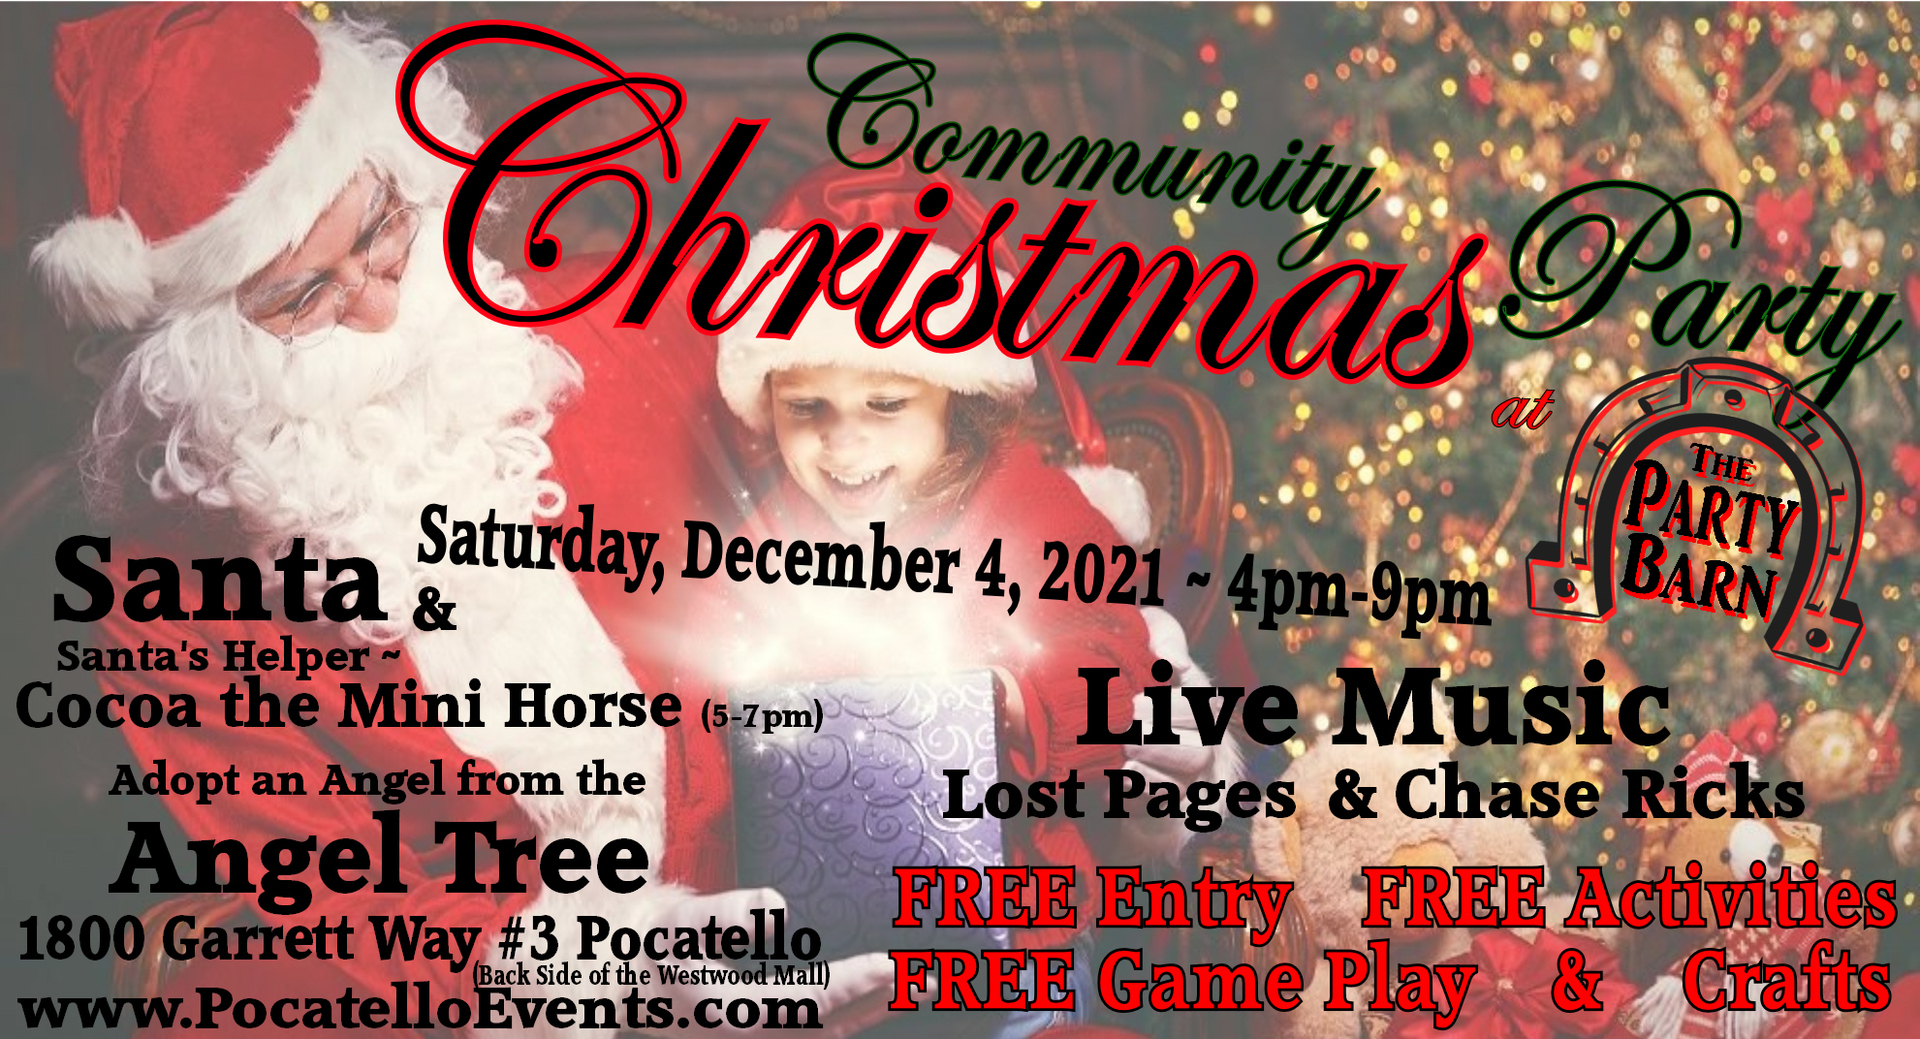 Community Christmas Party @ The Party Barn, Pocatello, Idaho, United States